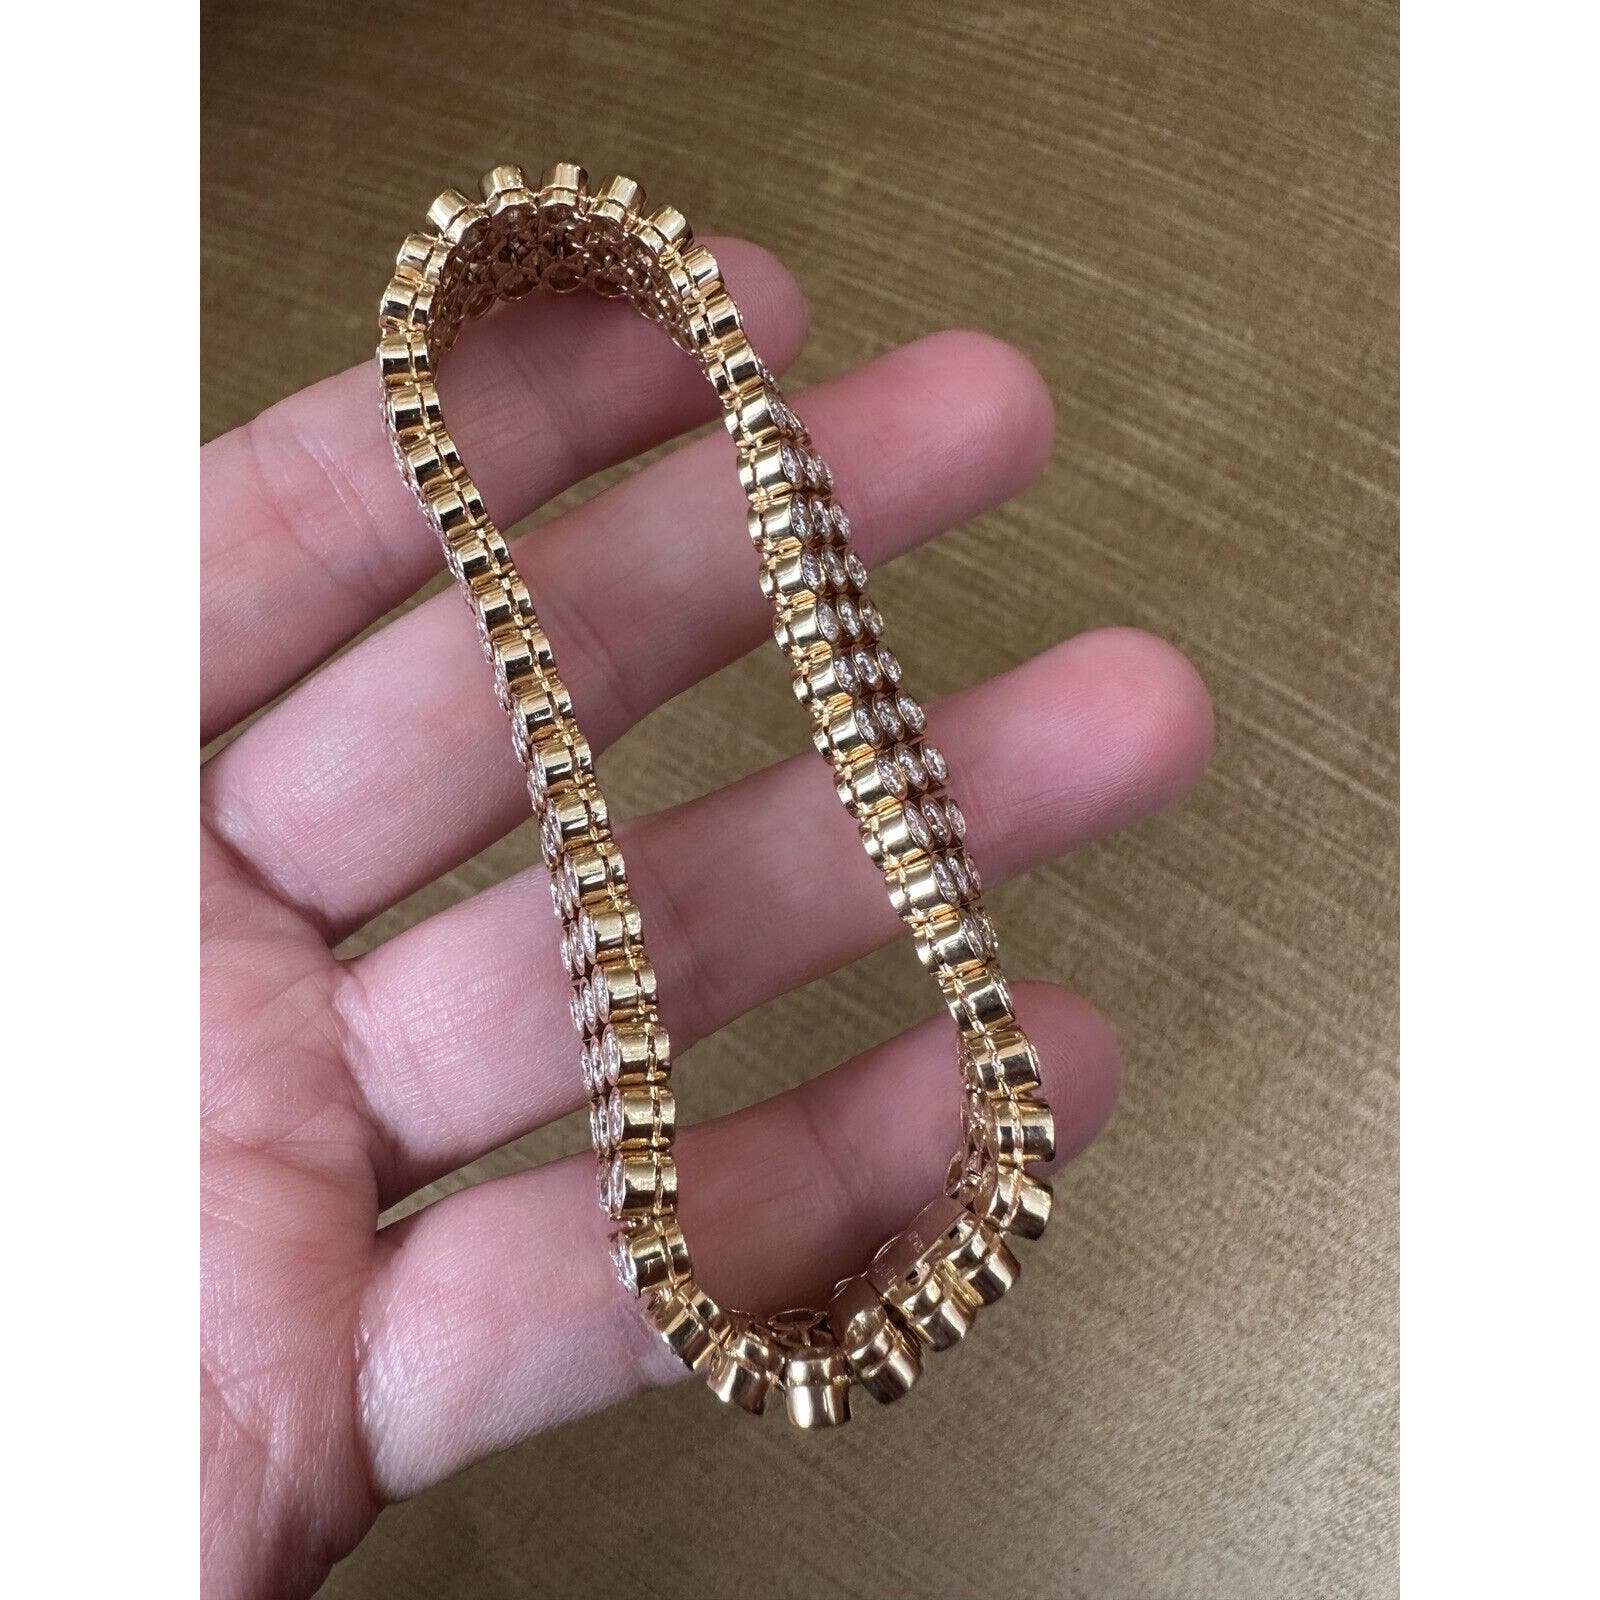 12.42cts Three Row Bezel Set Diamond Bracelet in 18k Yellow Gold - HM2143VA